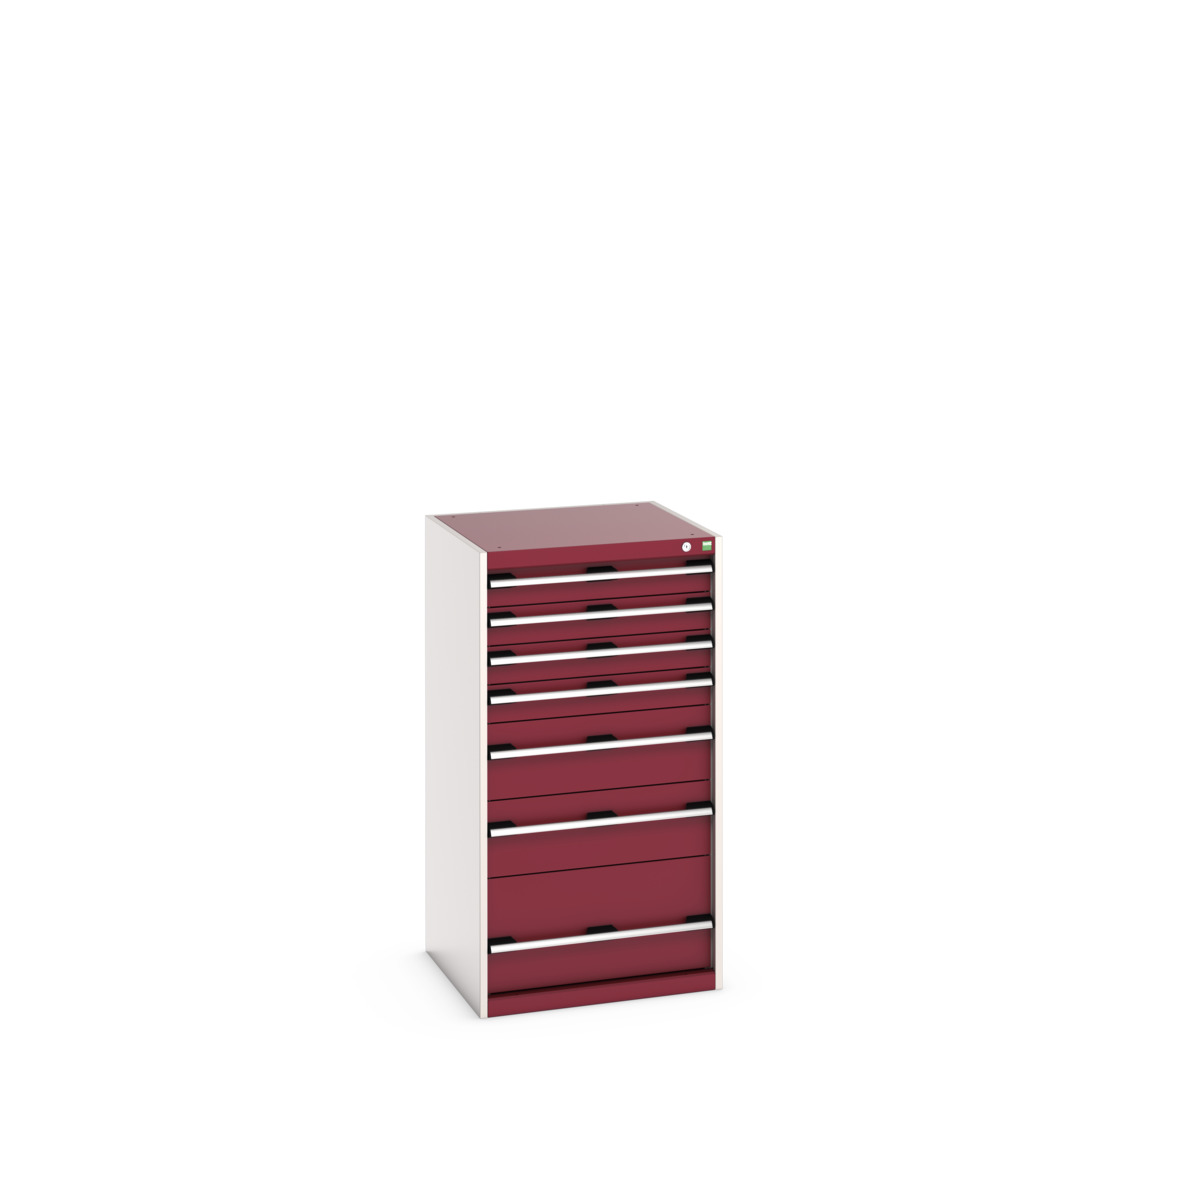 40019069.24V - cubio armoire à tiroirs SL-6612-7.1